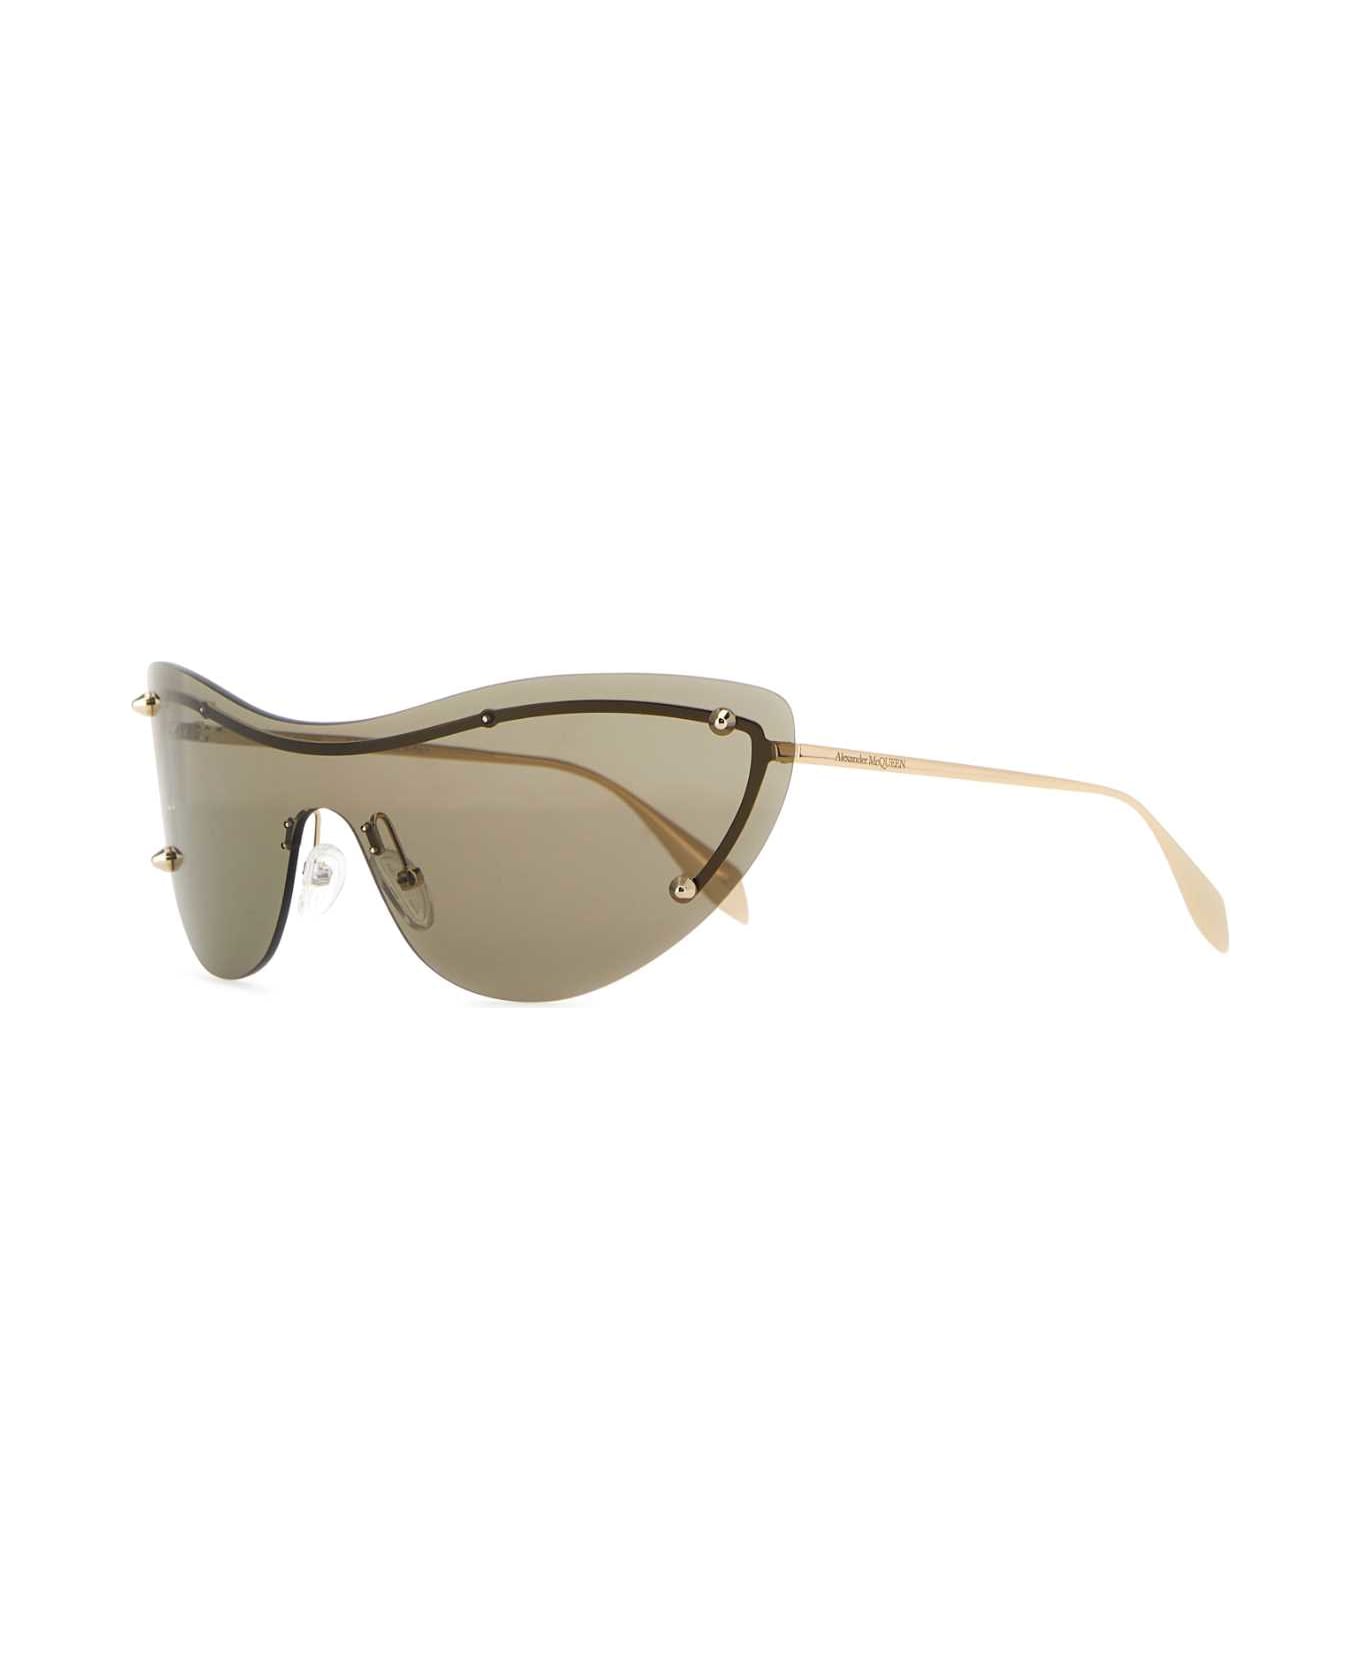 Alexander McQueen Gold Metal Spike Studs Sunglasses - GOLD-GOLD-BROWN サングラス